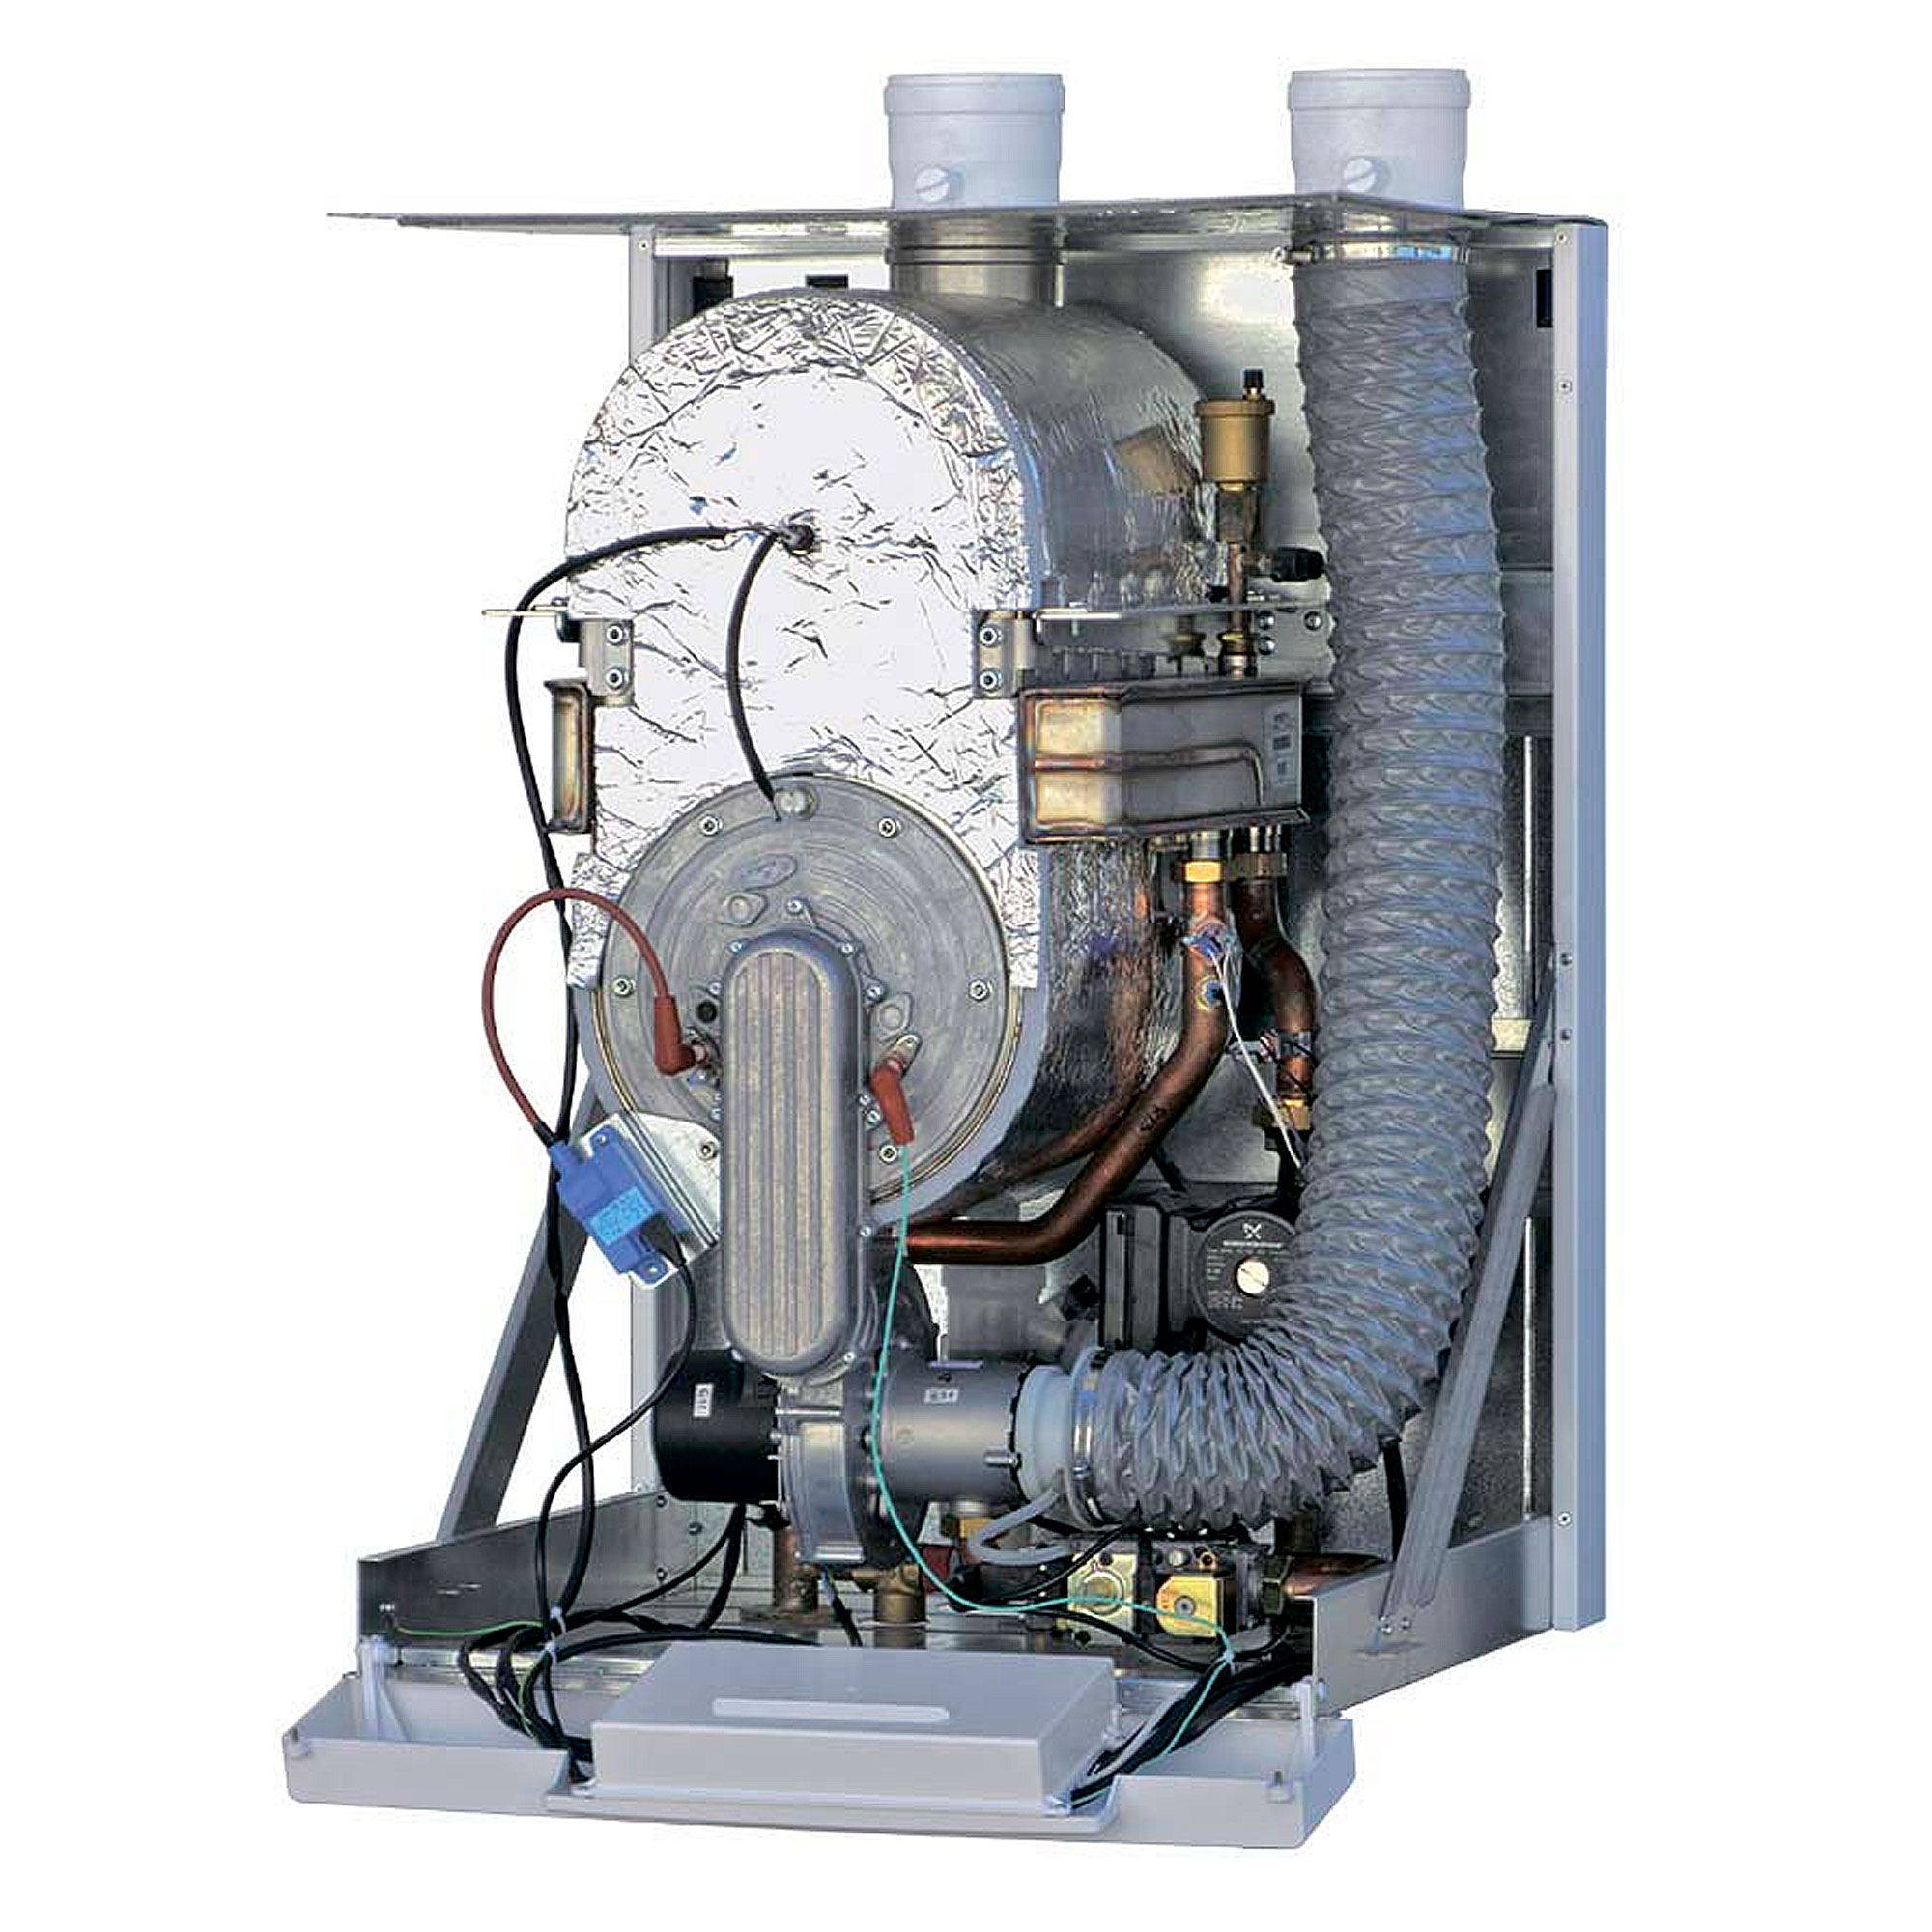 Газовый котел Italtherm Time Power 160 K цена 209372.00 грн - фотография 2